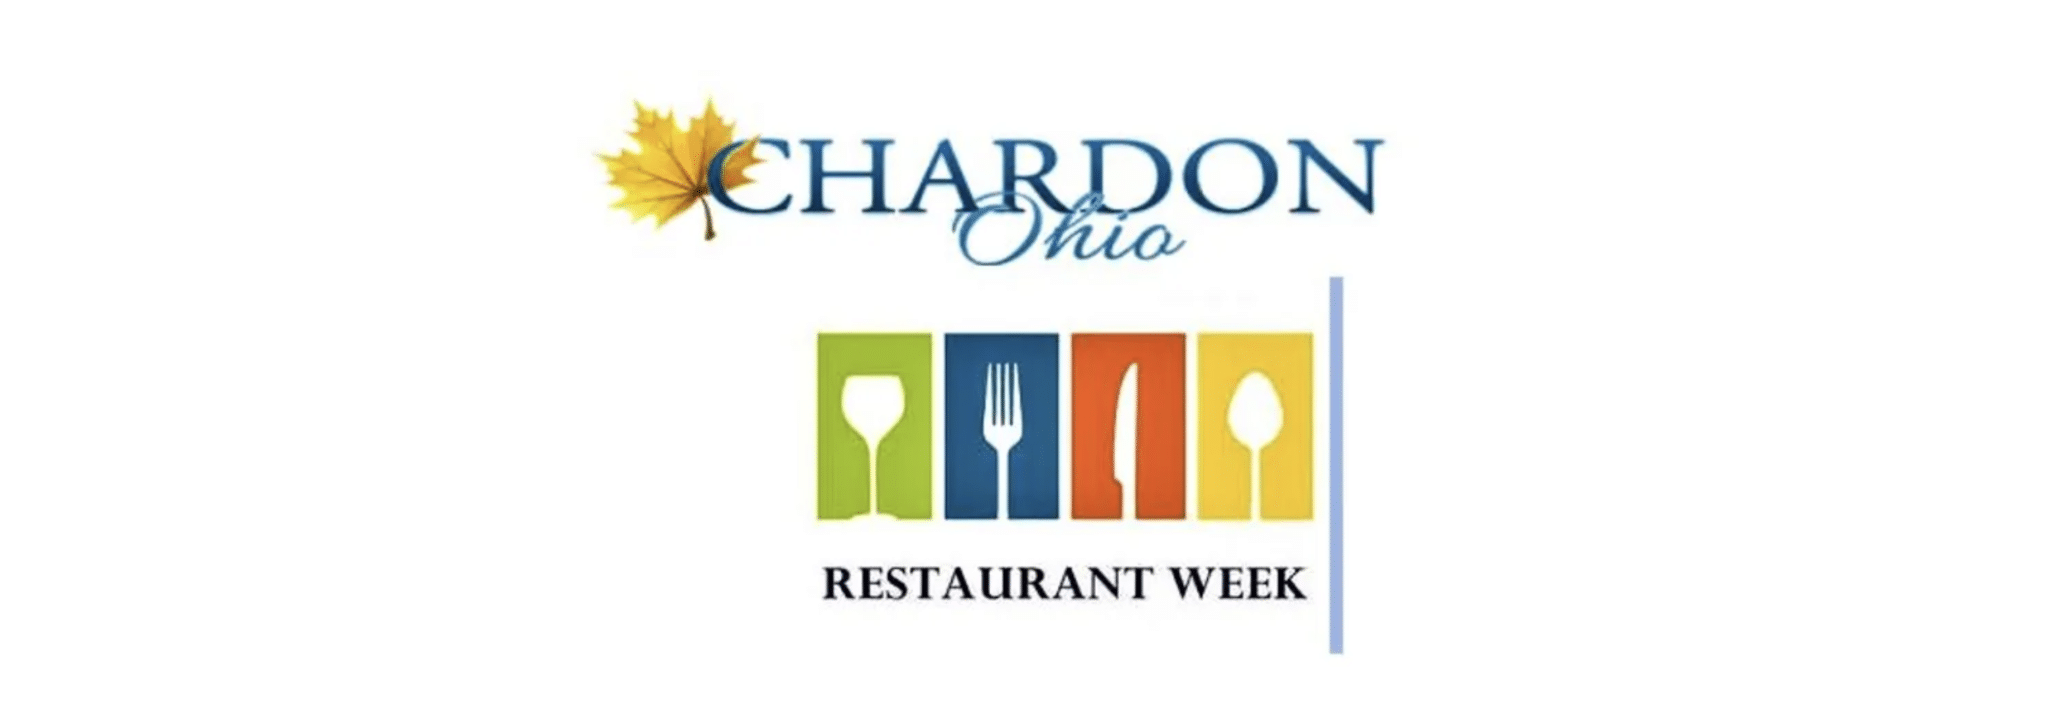 Chardon Restaurant Week Starts This Sunday Geauga County Maple Leaf